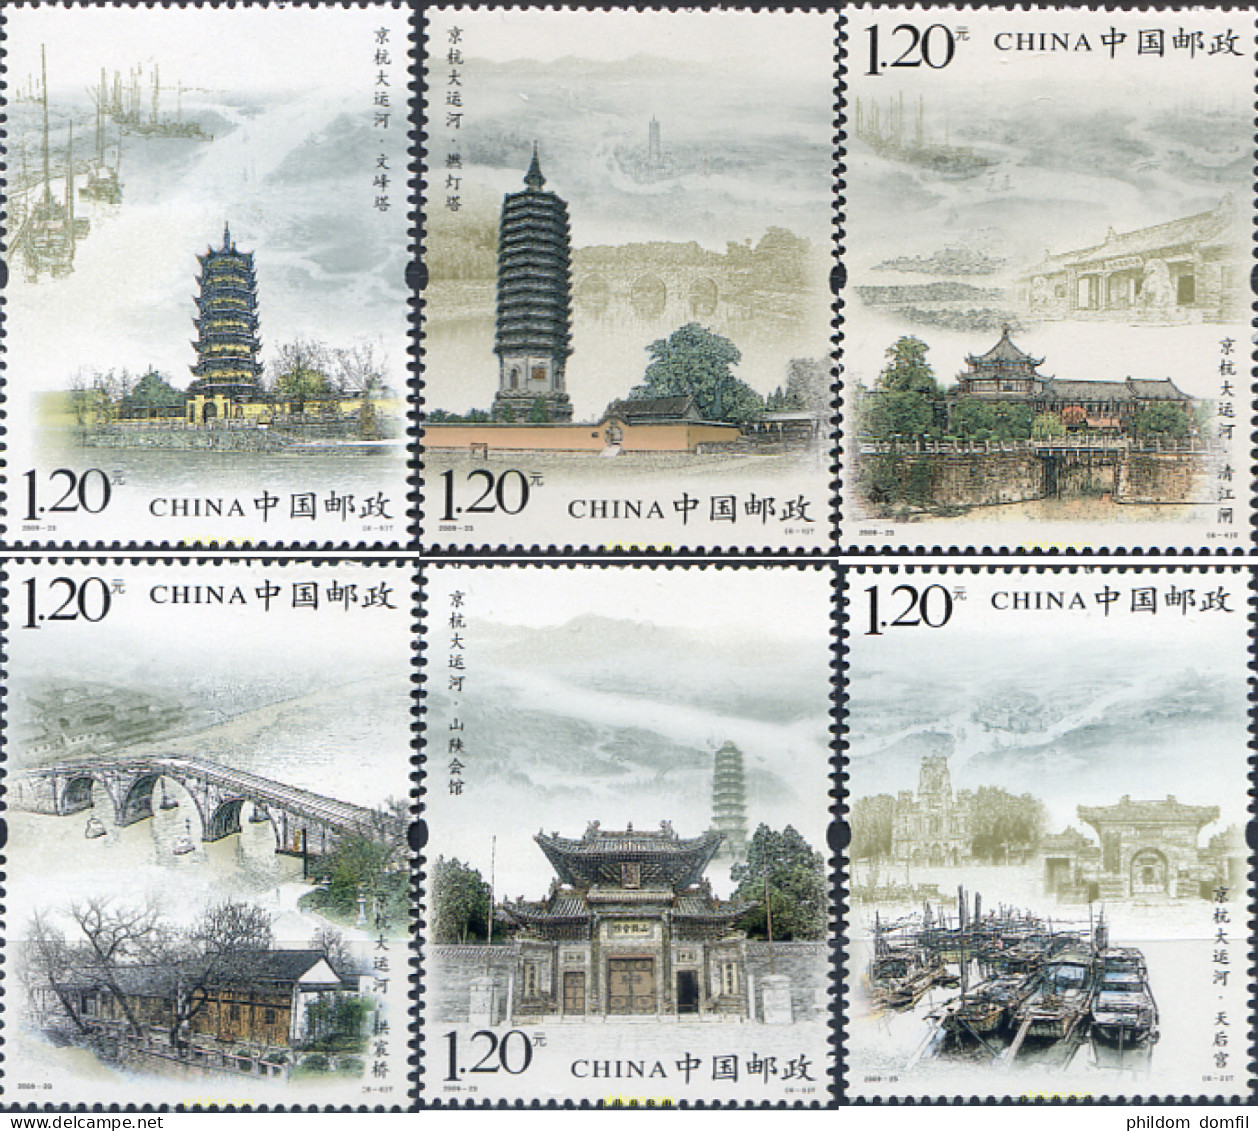 242789 MNH CHINA. República Popular 2009 JING-HANG DAYUNHE - Unused Stamps